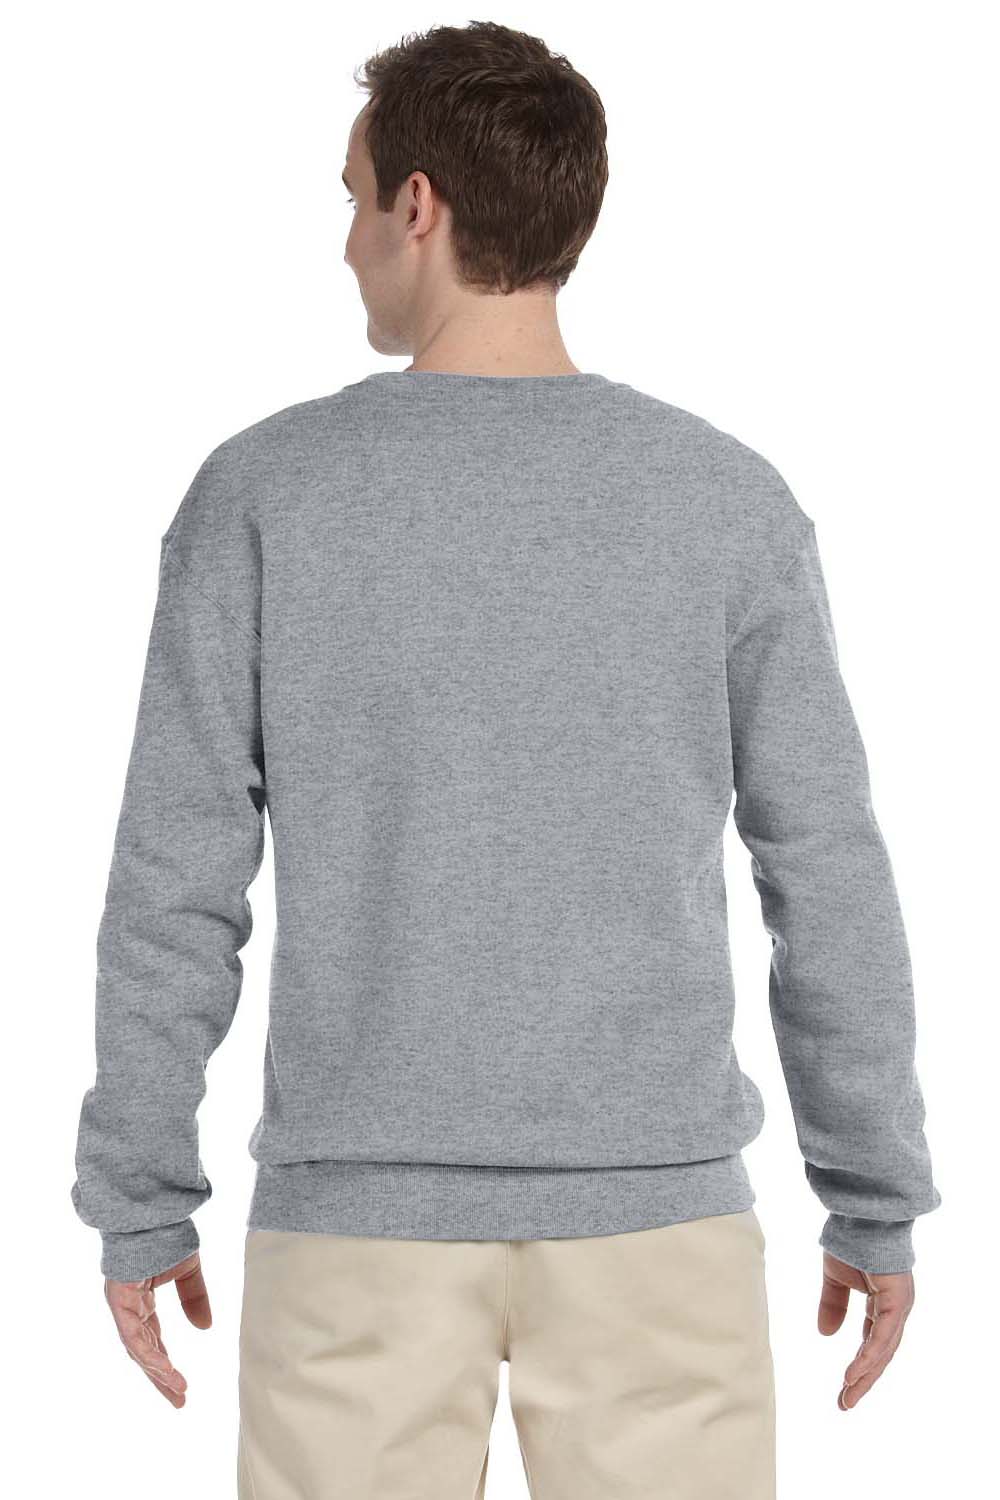 Jerzees 562 Mens NuBlend Fleece Crewneck Sweatshirt Oxford Grey Back